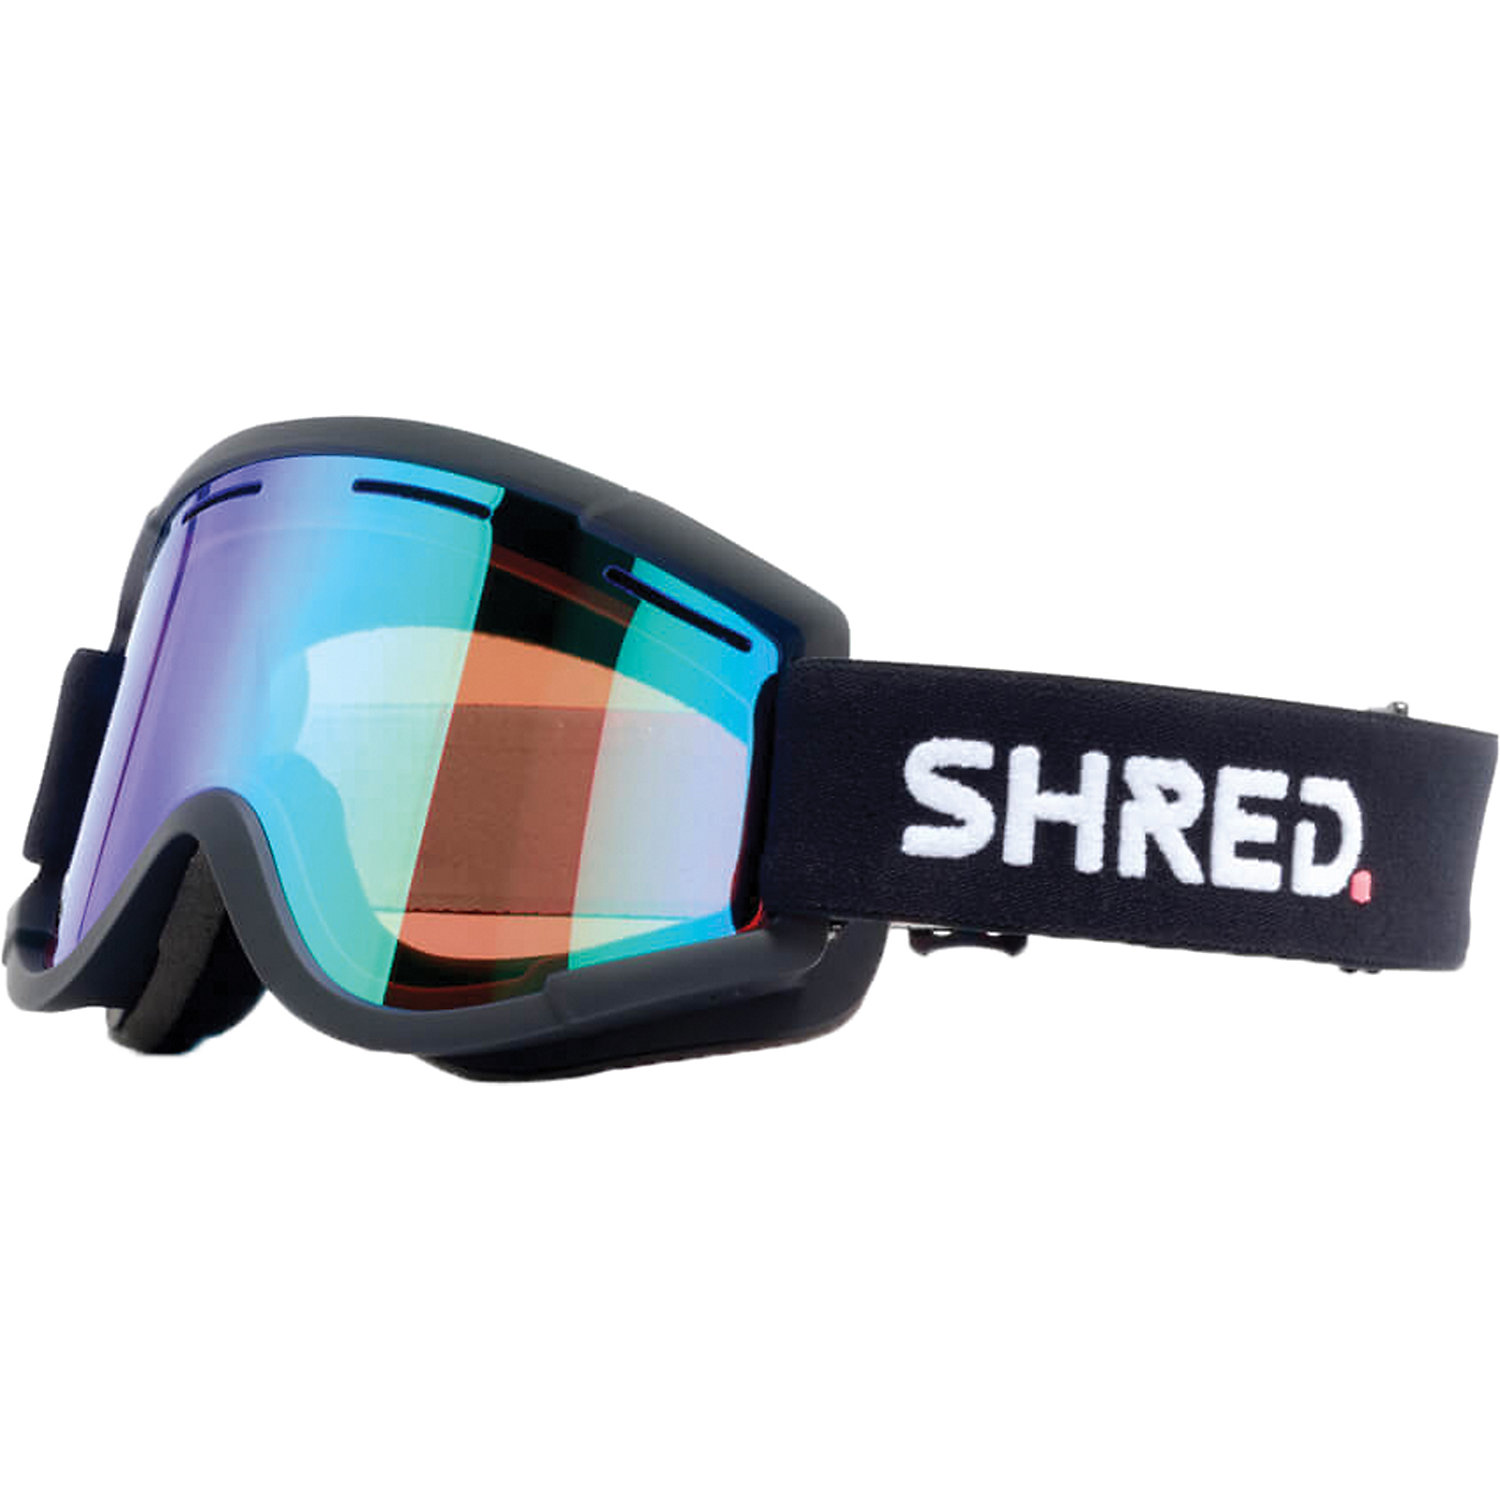 Shred Nastify Snow Goggles